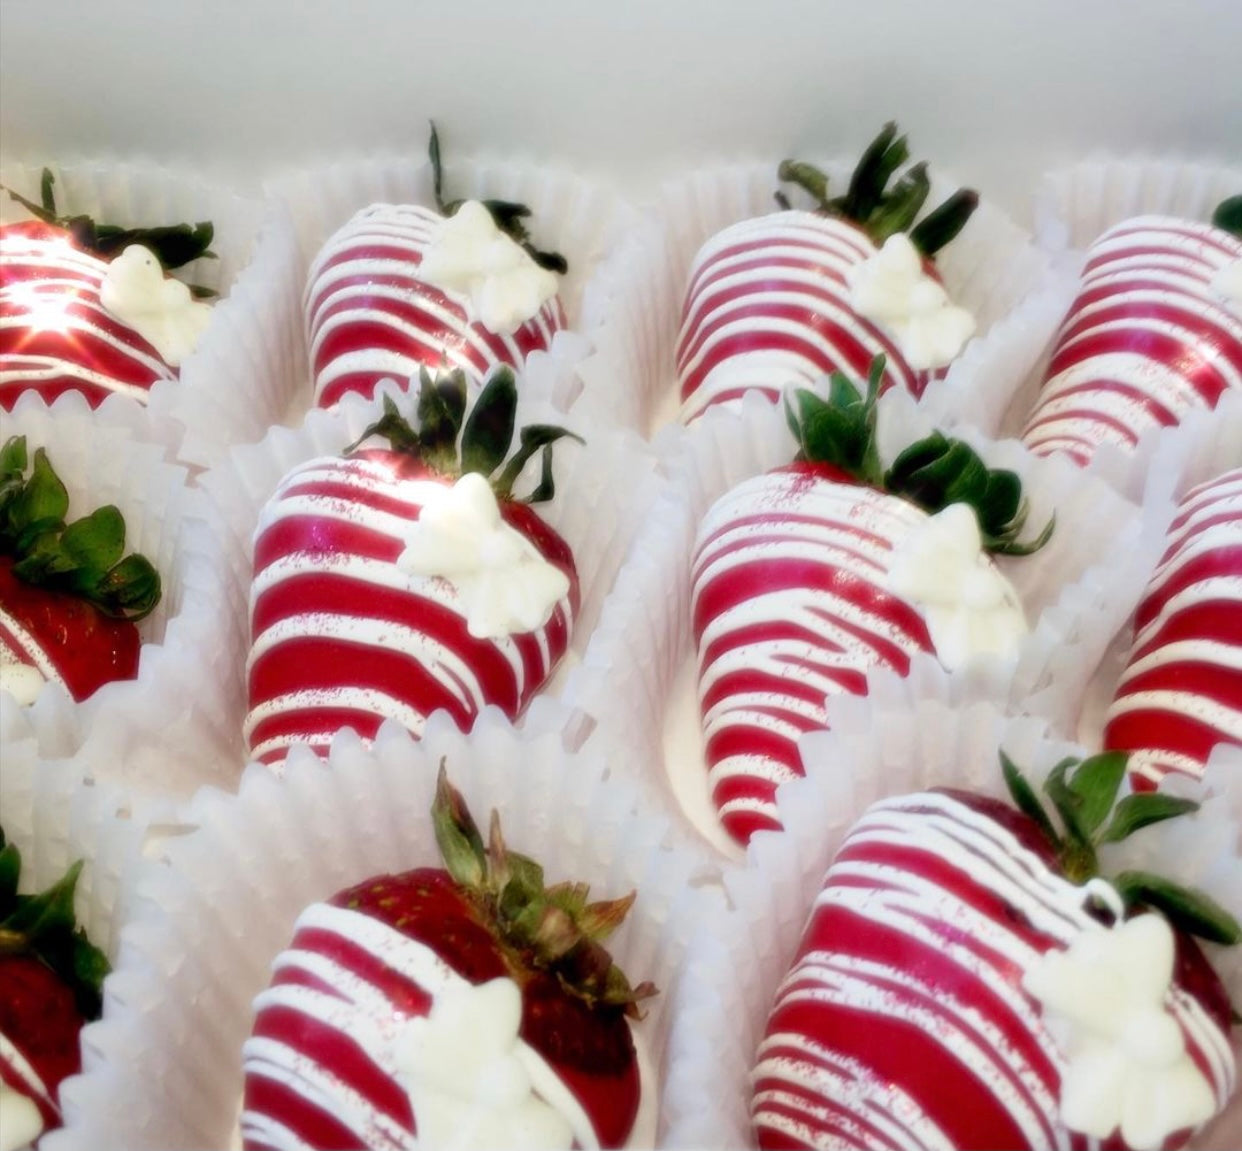 Themed Chocolate-Covered Strawberries (1dz)